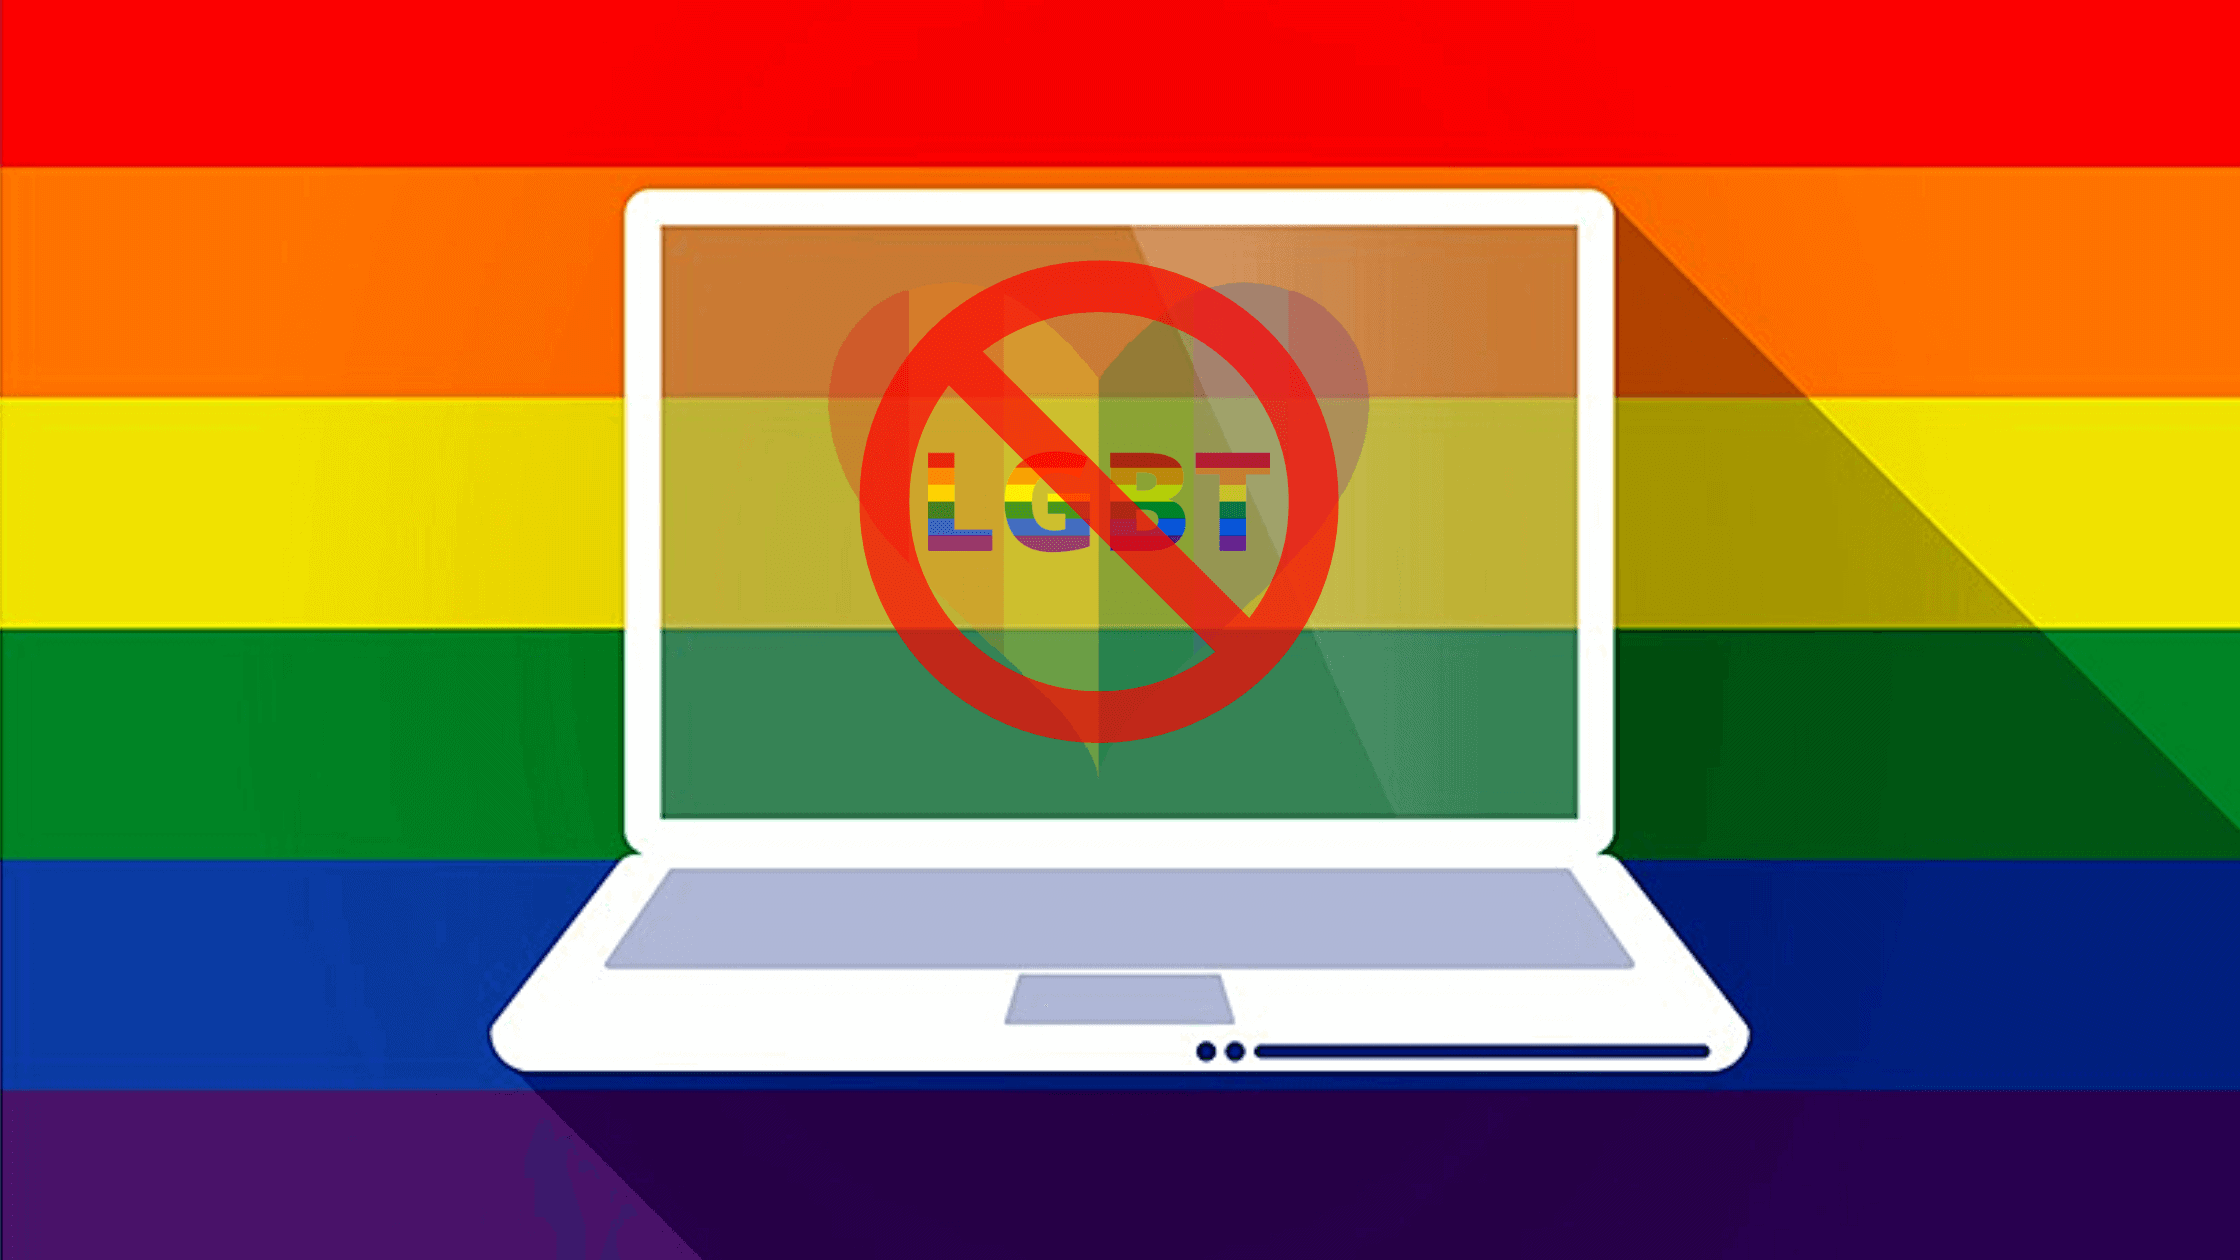 Russia's Media Regulator Receives Authority To Block All LGBT Websites